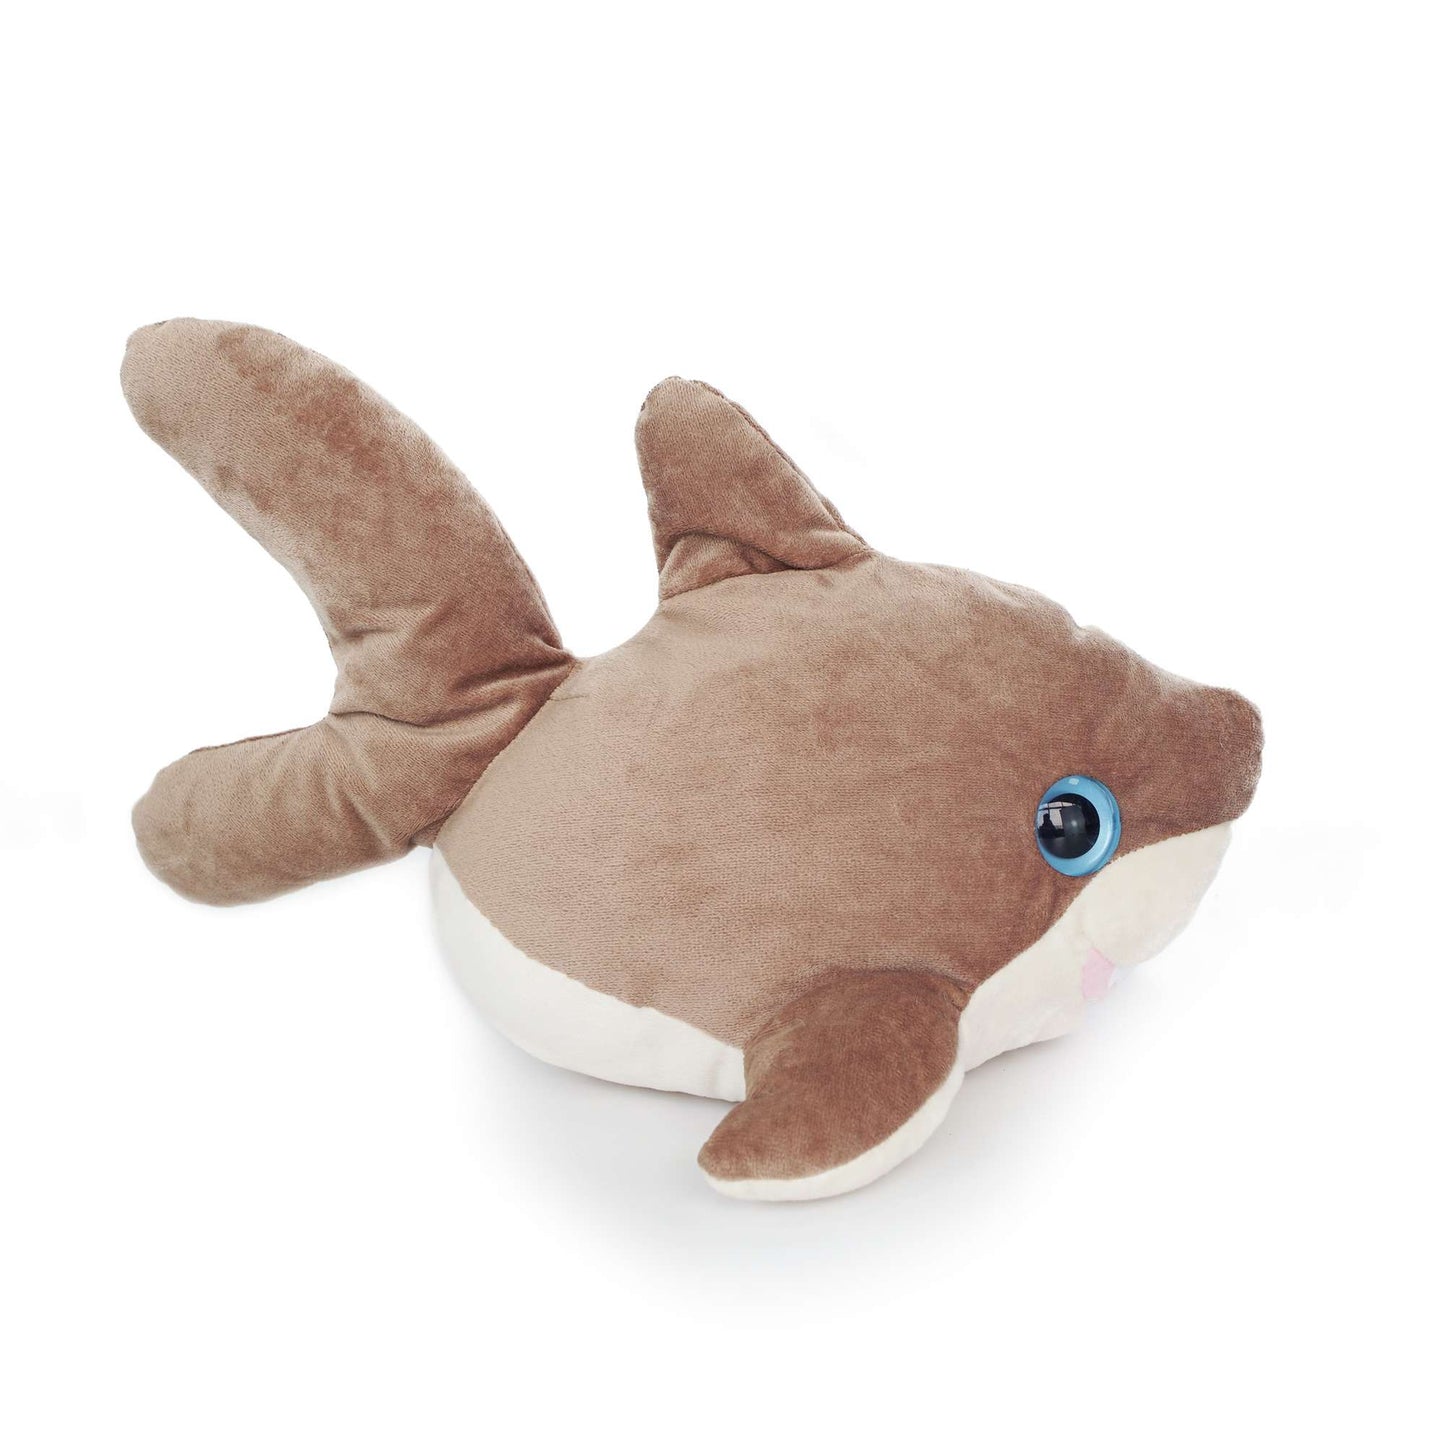 body shape chubby cute baby shark stuffed animal PlushThis